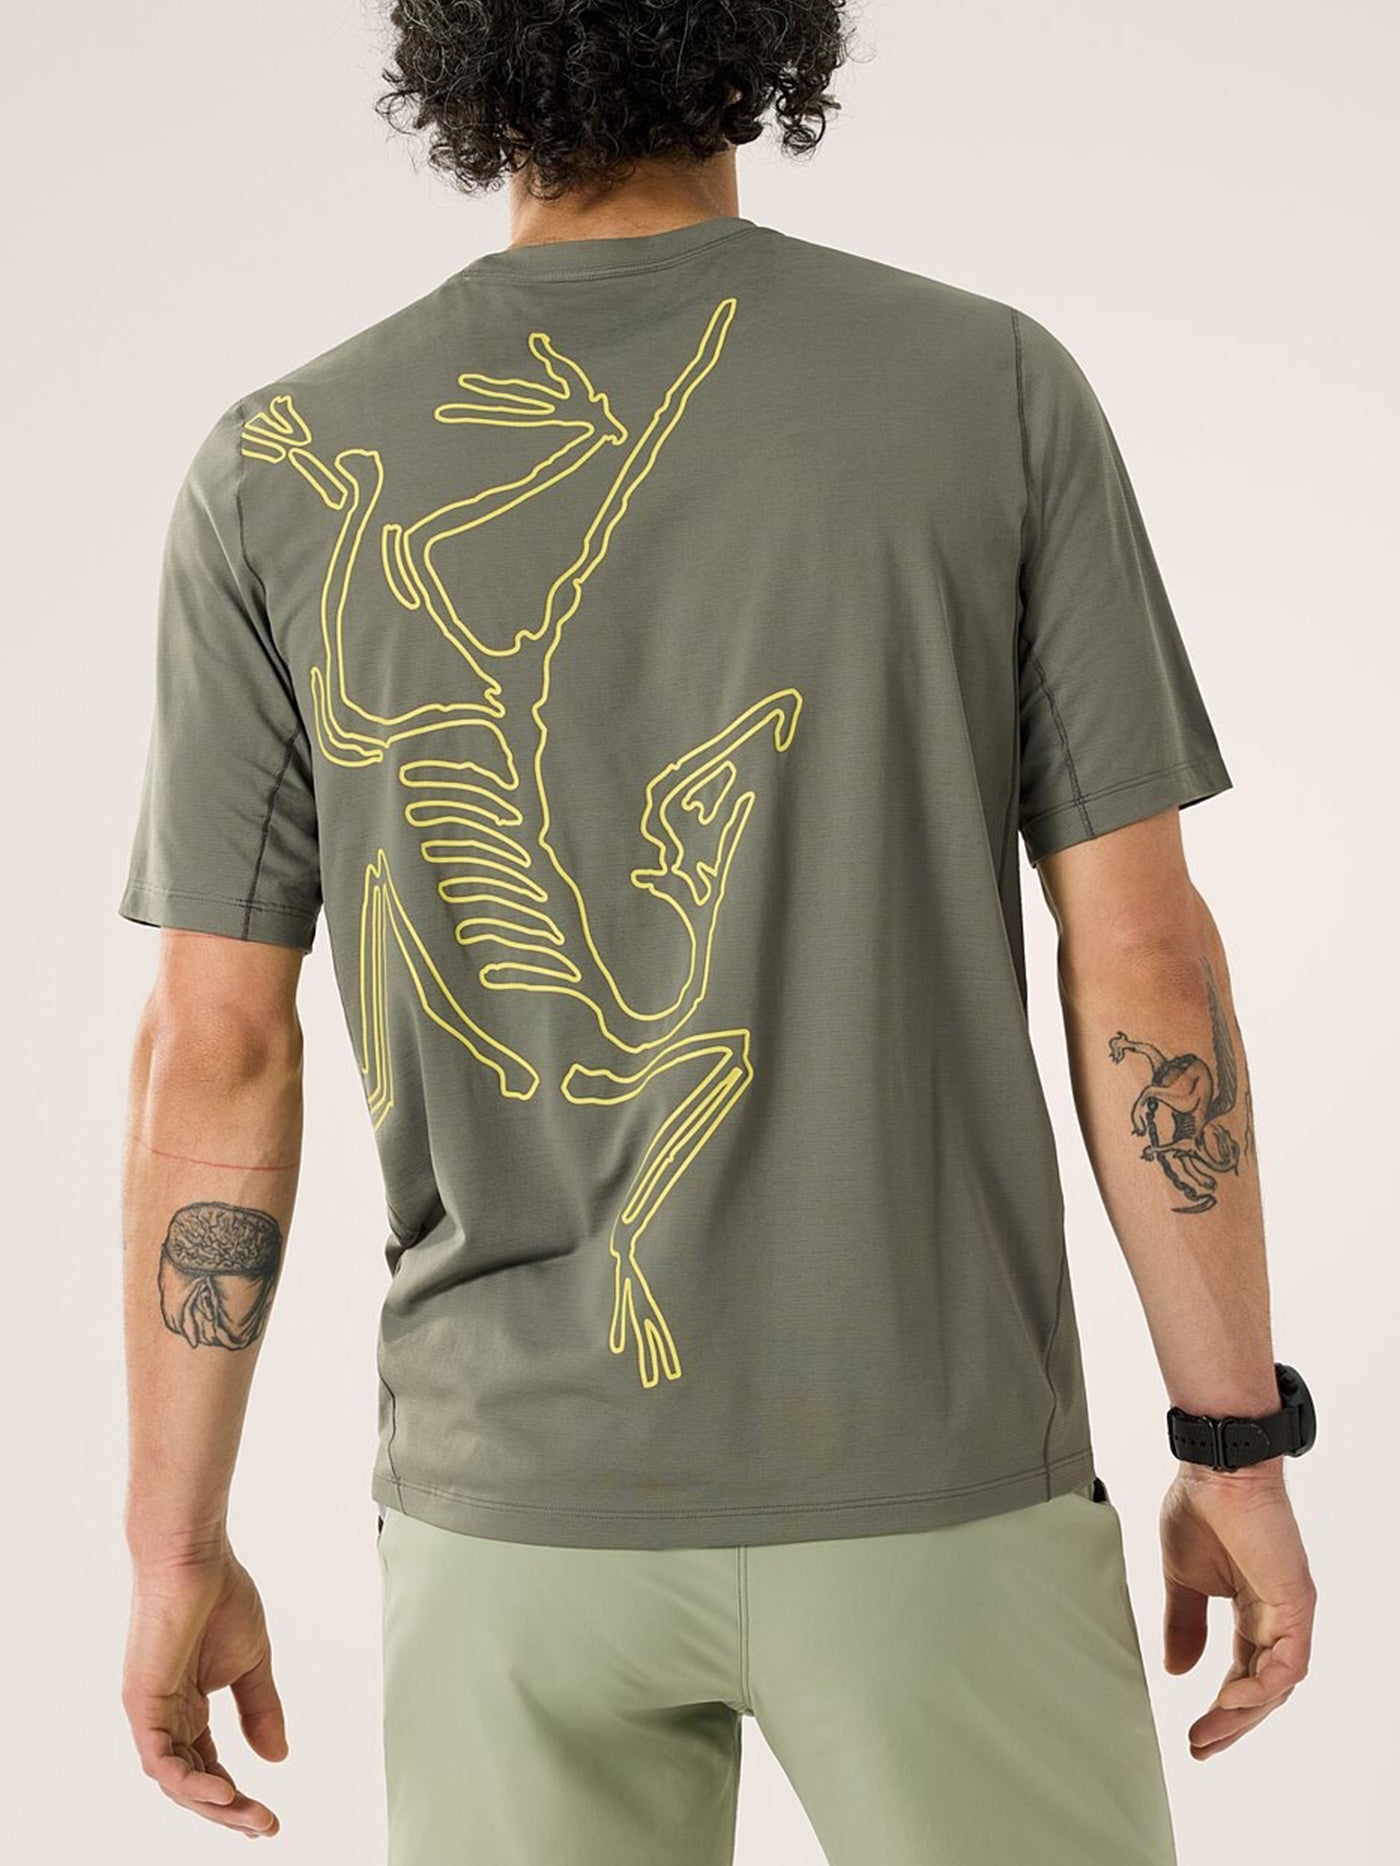 Arcteryx Cormac Arc’bird Logo T-Shirt